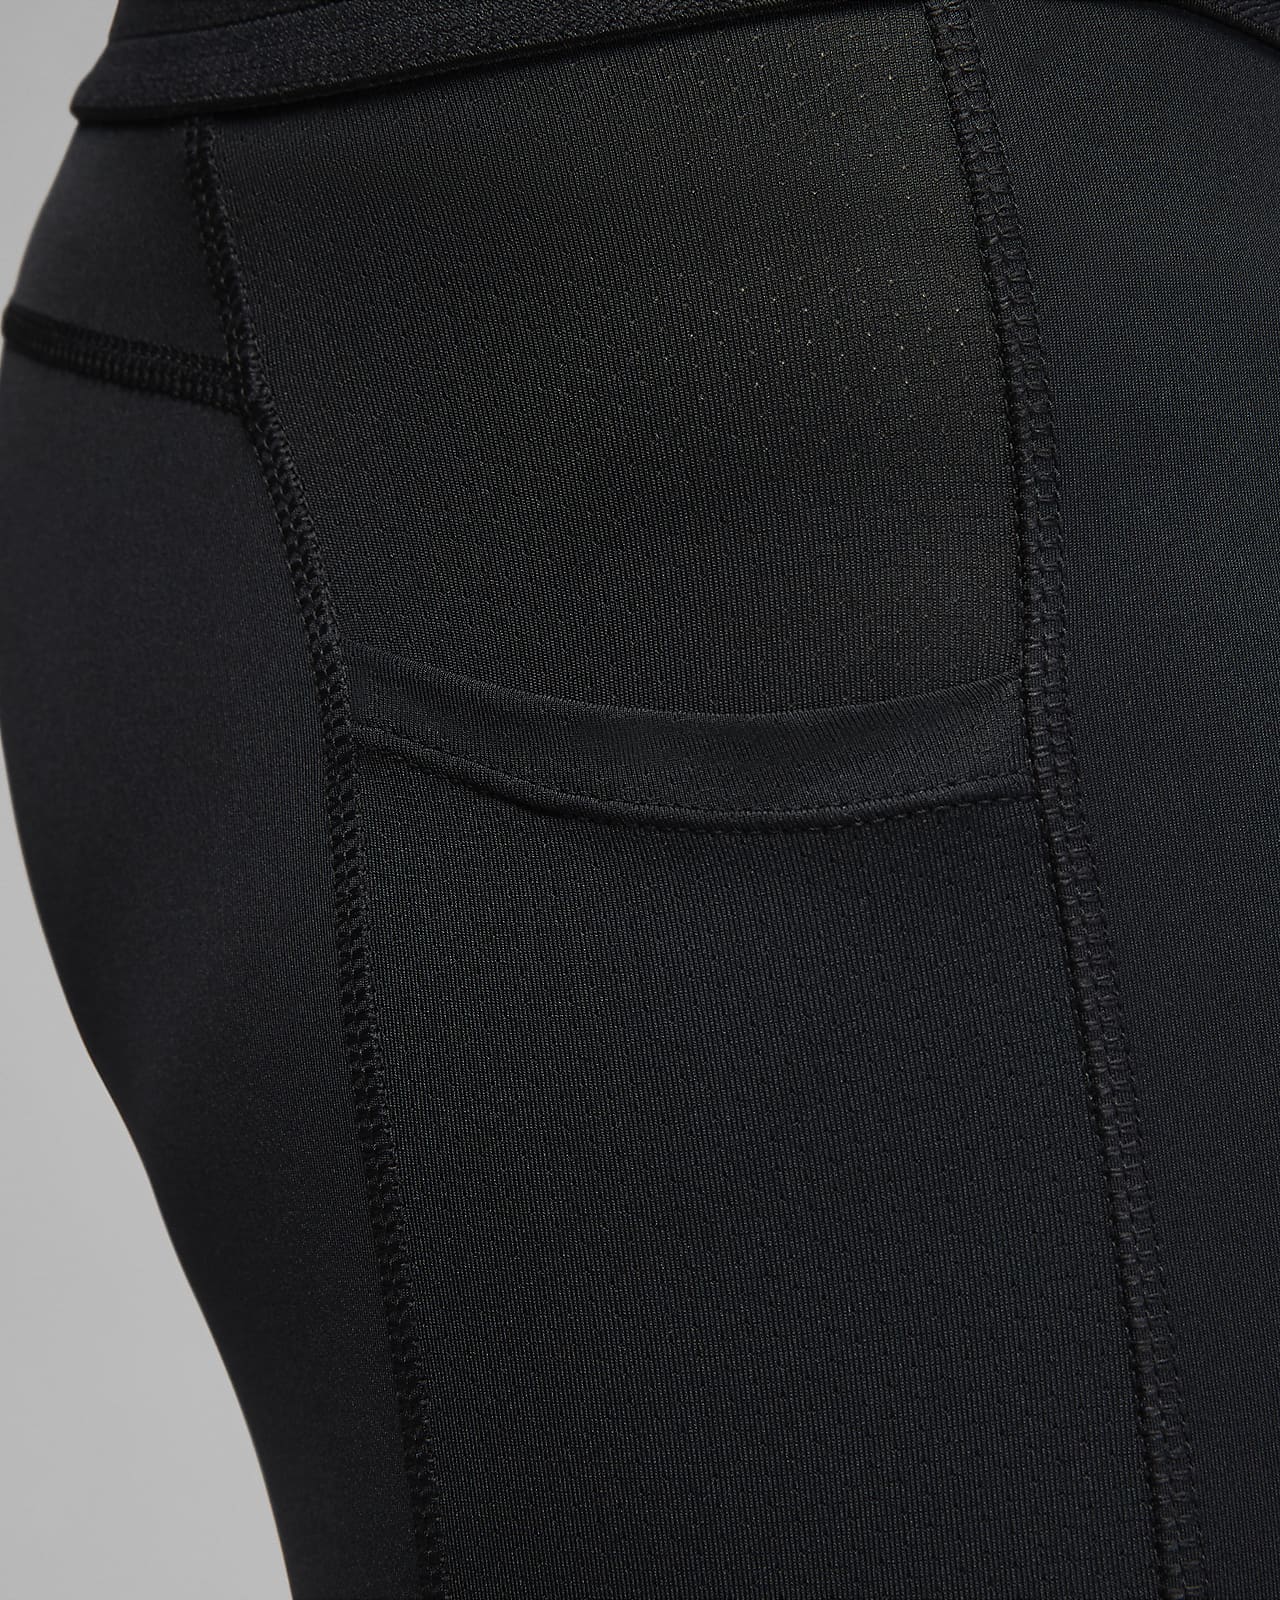 Air Jordan Compression Pants Men's Black New with Tags L 429